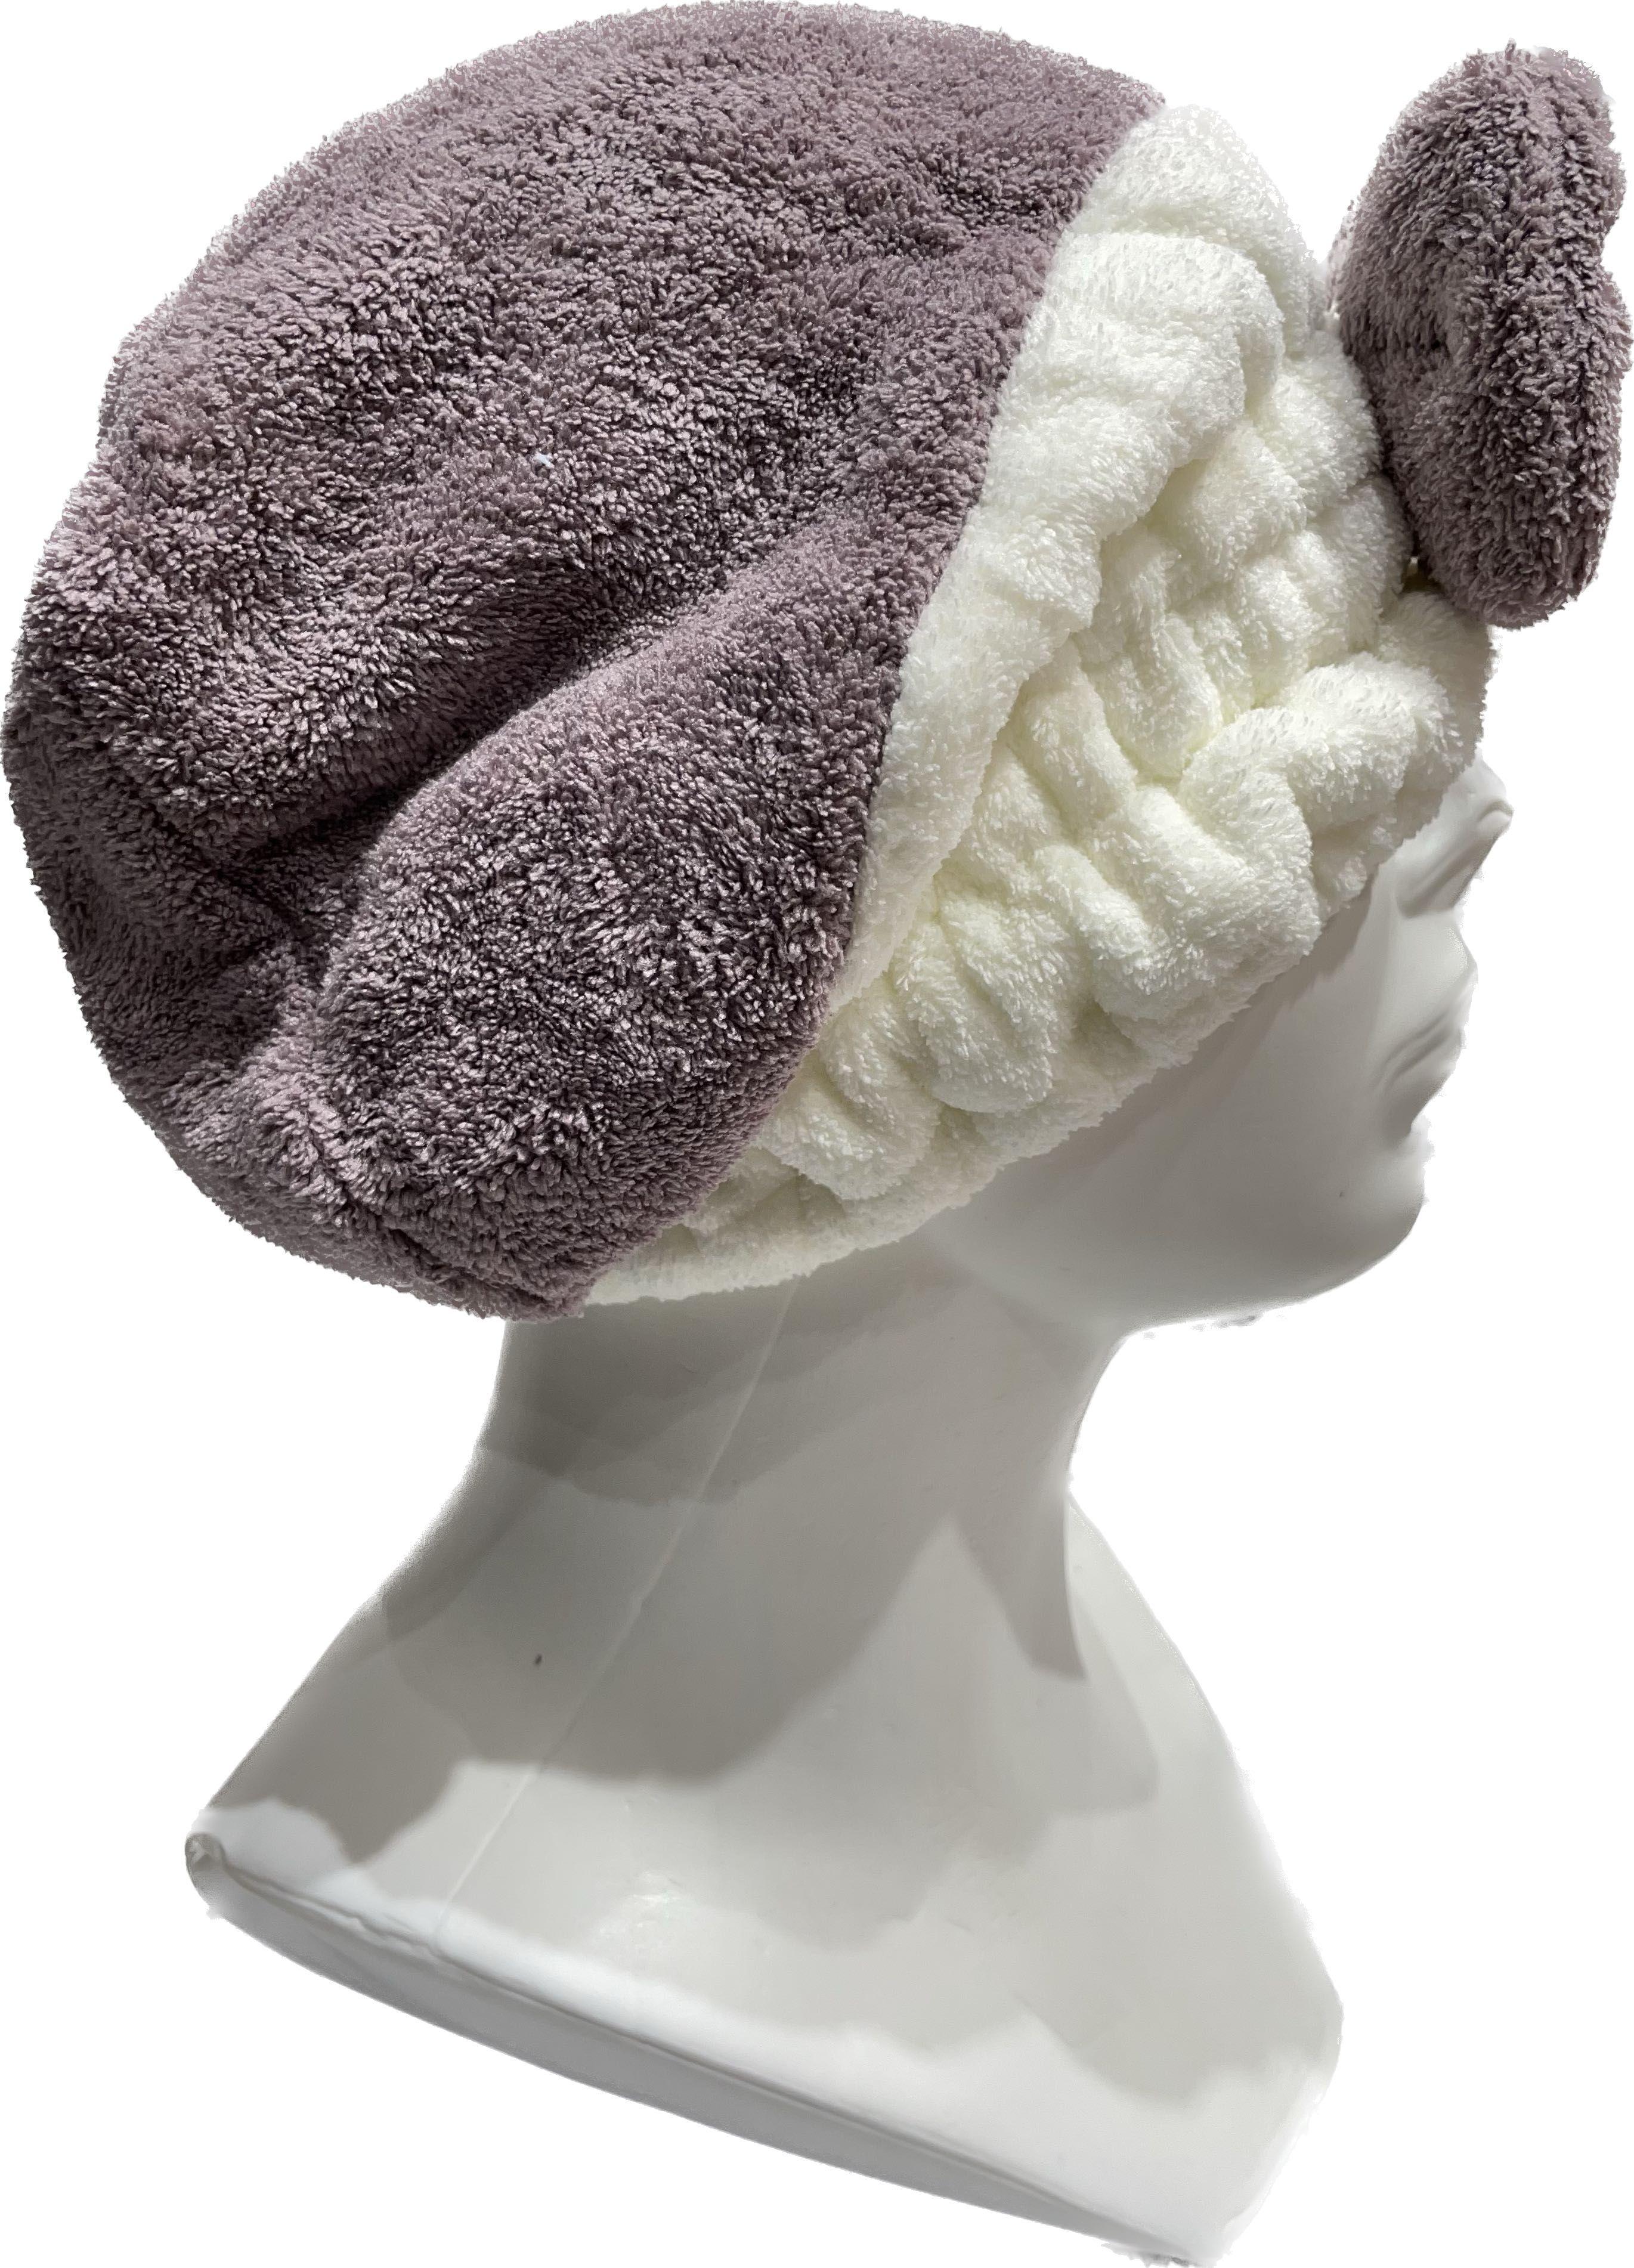 Super absorbent hair towel, hair turban - with a bow